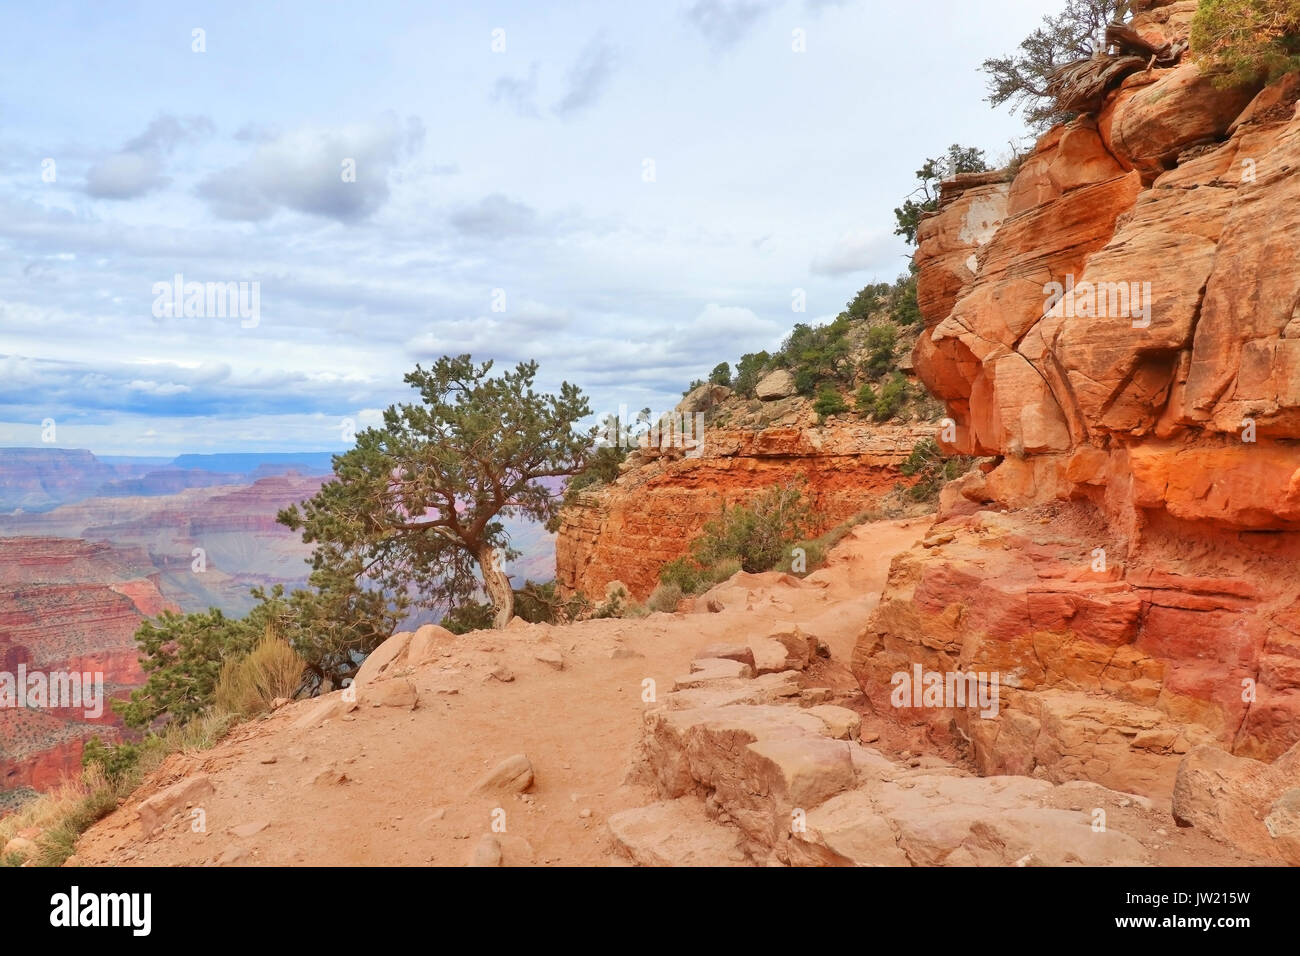 Erstaunliche Landschaft im Grand Canyon National Park, Arizona, USA. Blick auf rotem Sandstein Kaibab Trail, South Rim. Wandern im Grand Canyon. Natur b Stockfoto